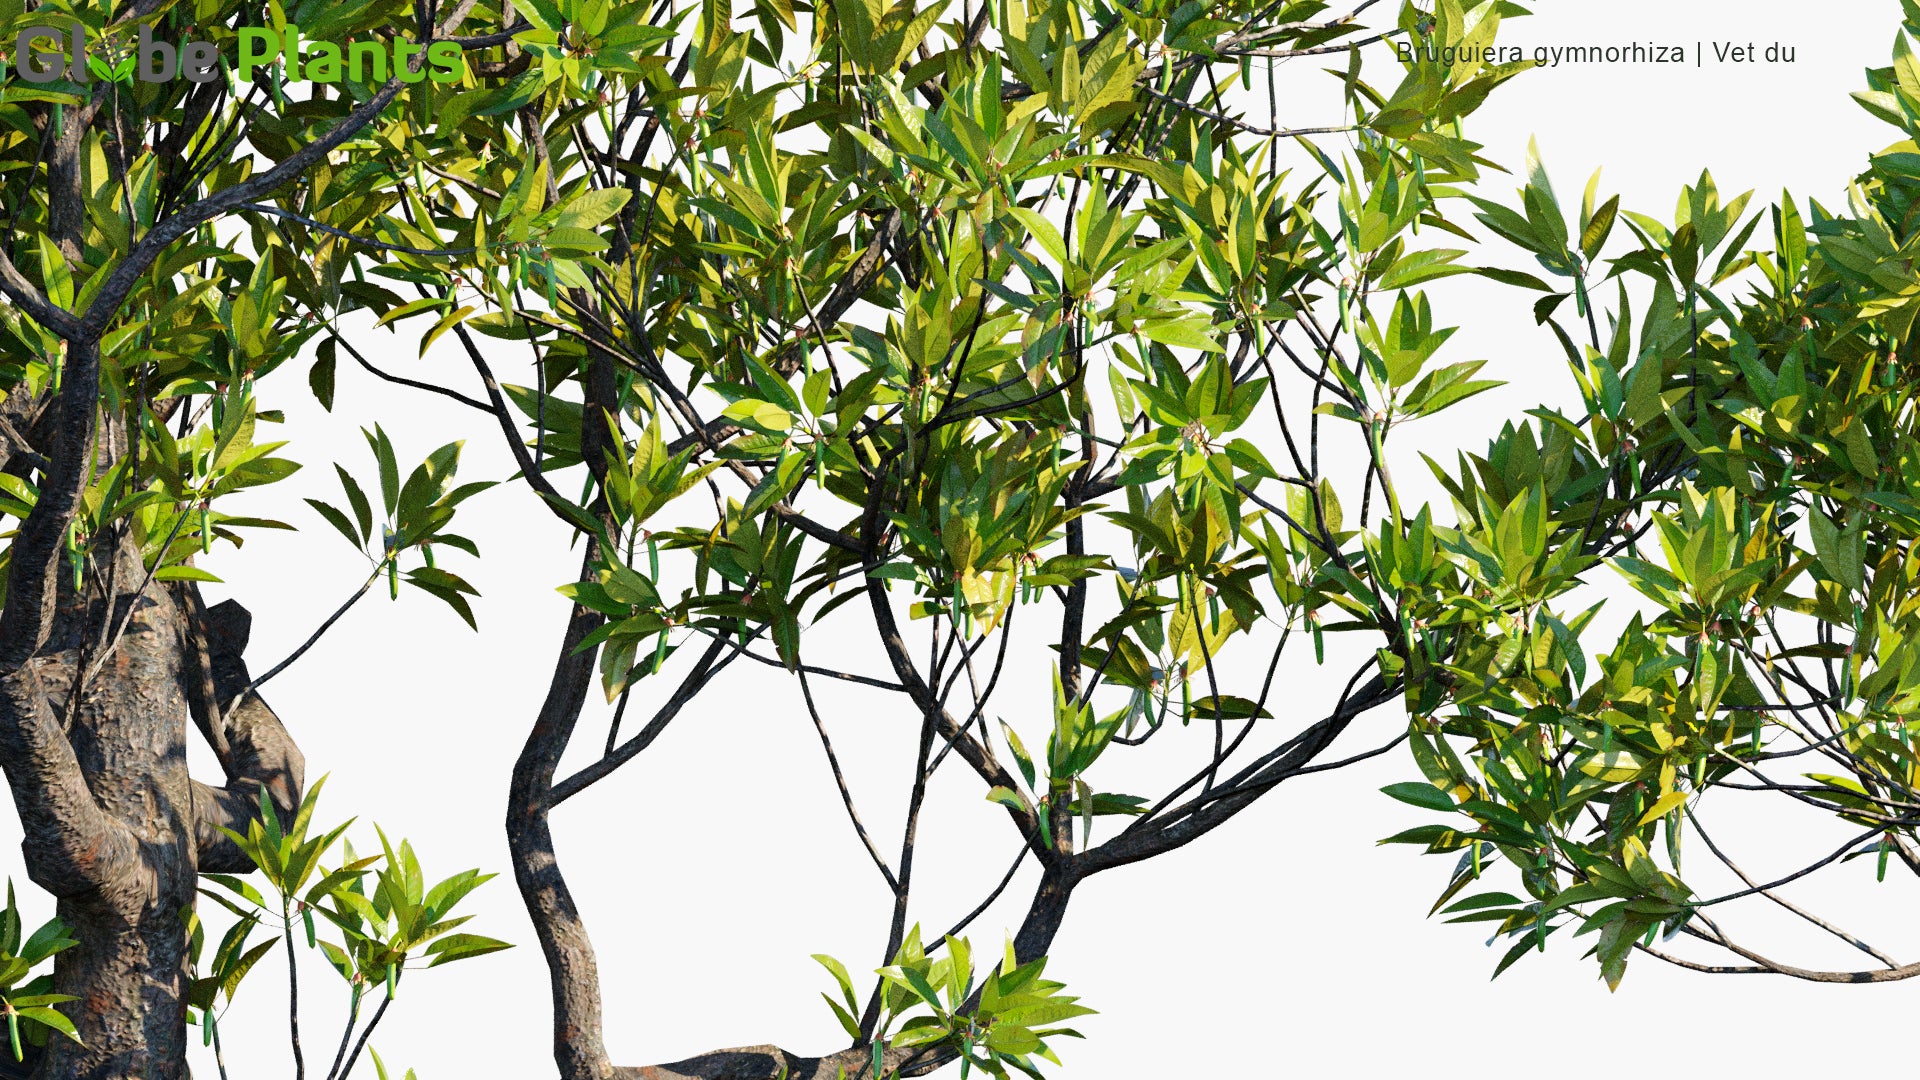 Bruguiera Gymnorhiza - Vet Du, Large-Leafed Orange Mangrove, Oriental Mangrove